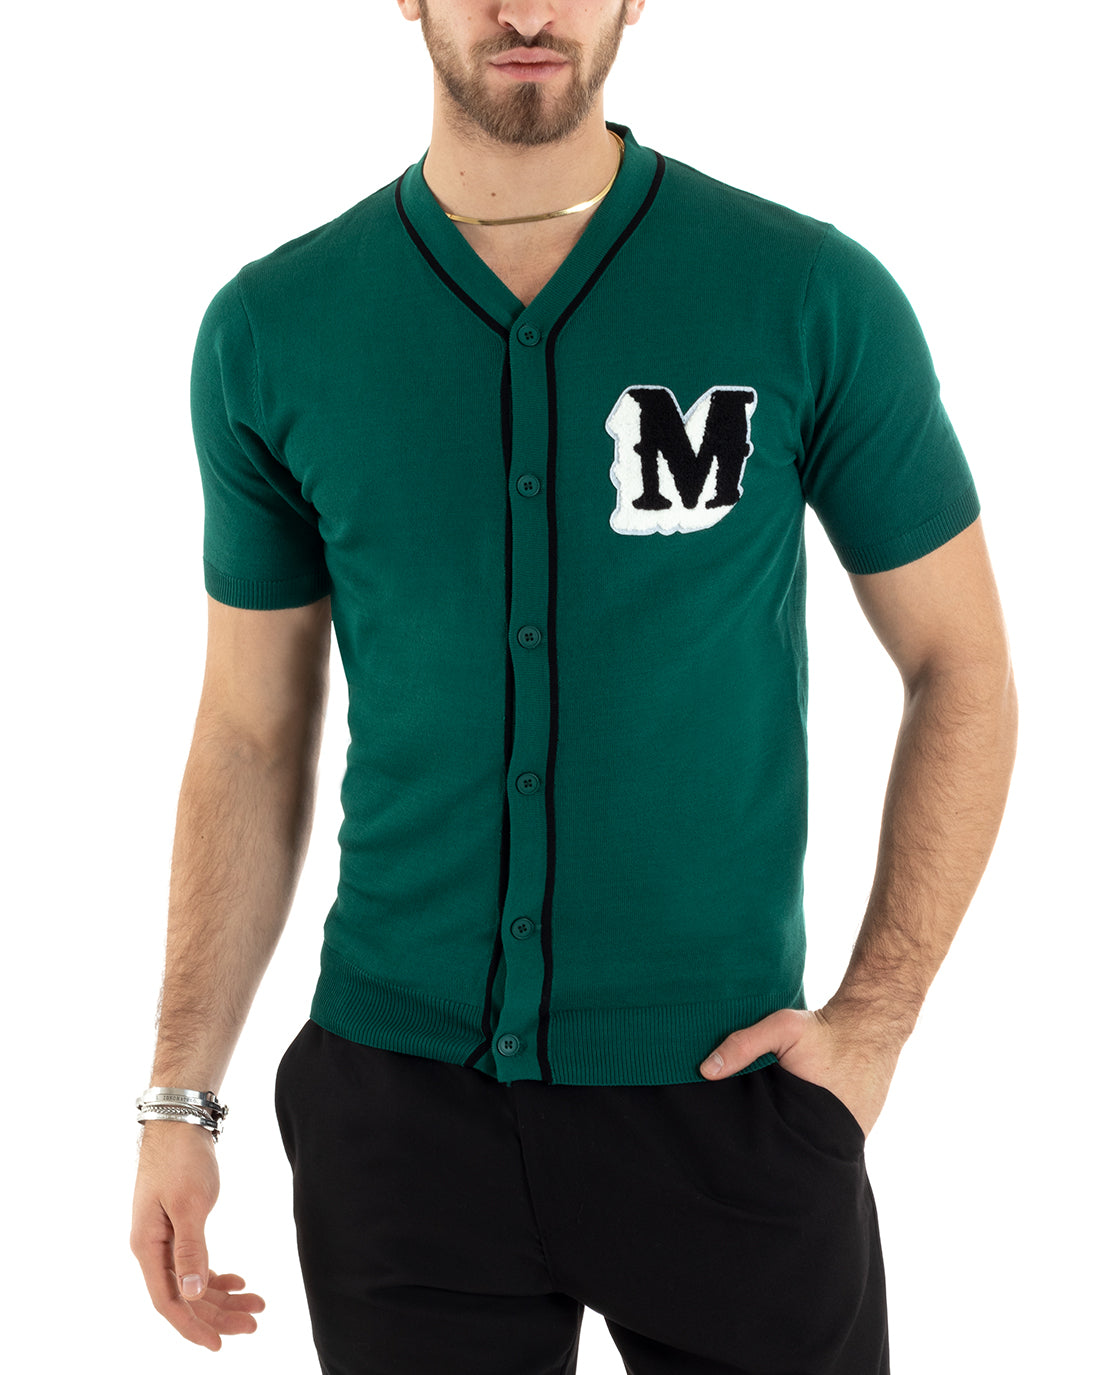 T-shirt Uomo Manica Corta Cardigan Verde Manica Corta Stampa Bottoni Casual GIOSAL-TS2872A